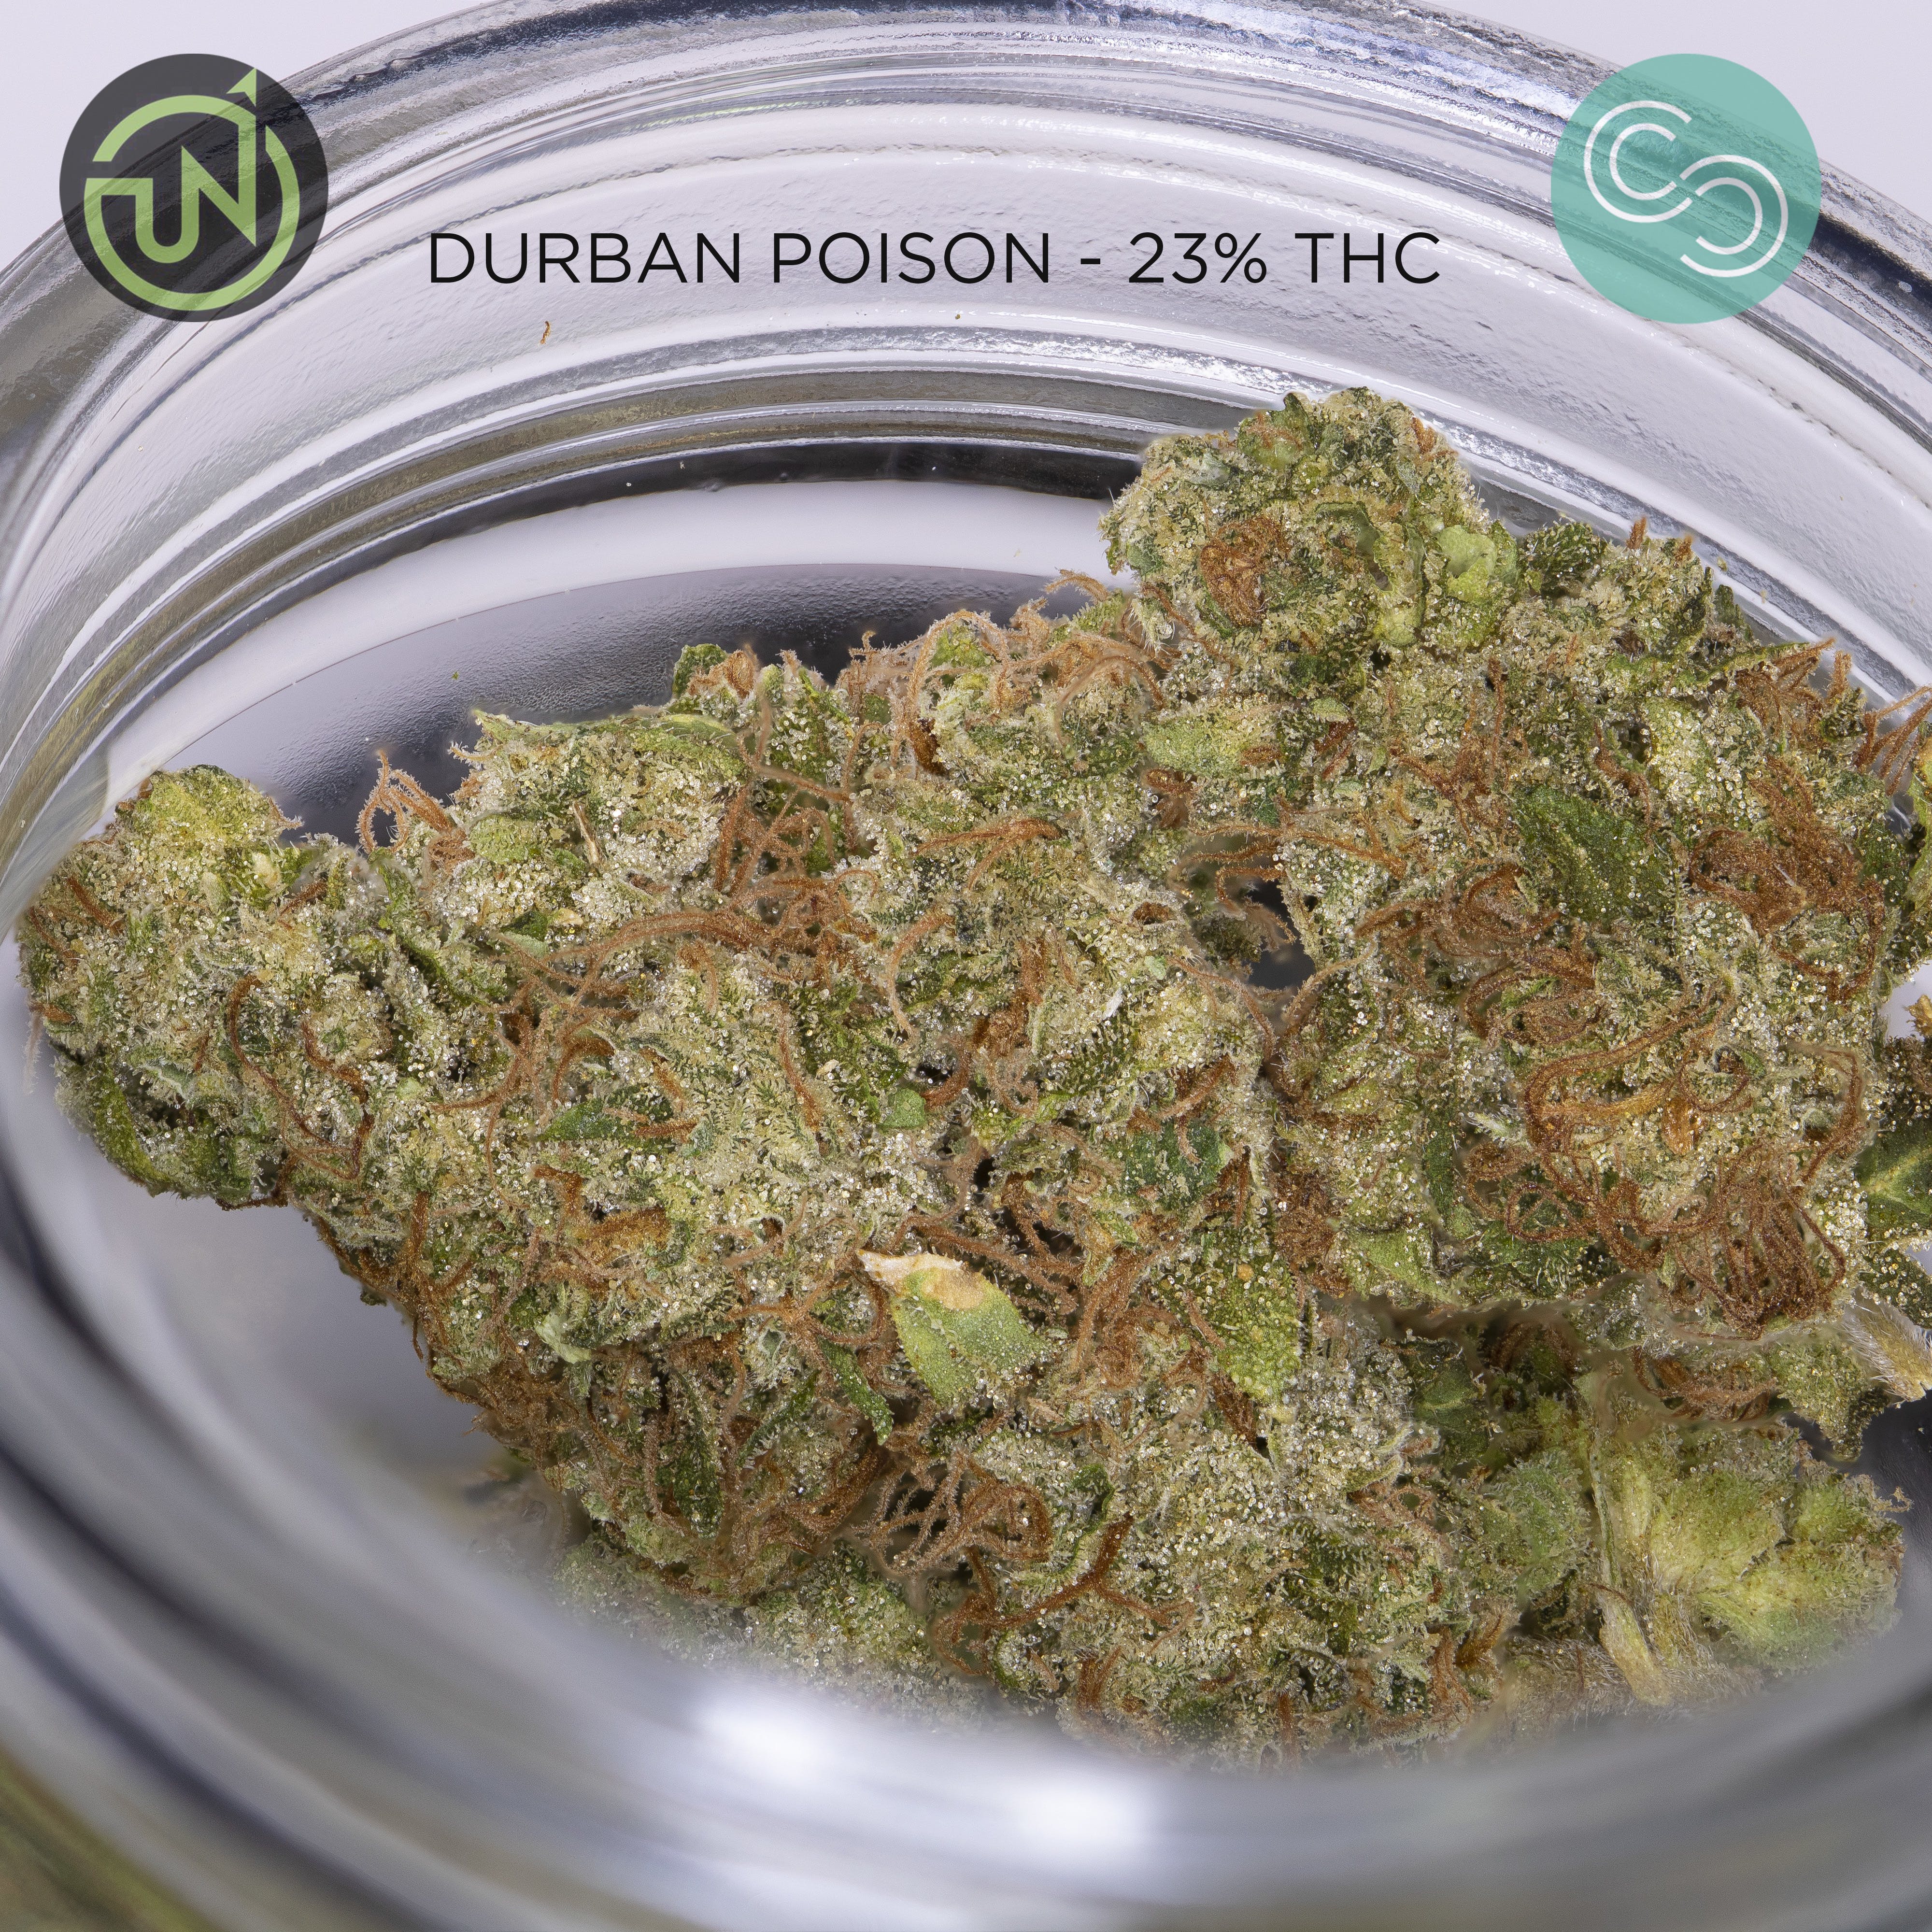 Upnorth - Durban Poison 23% THC